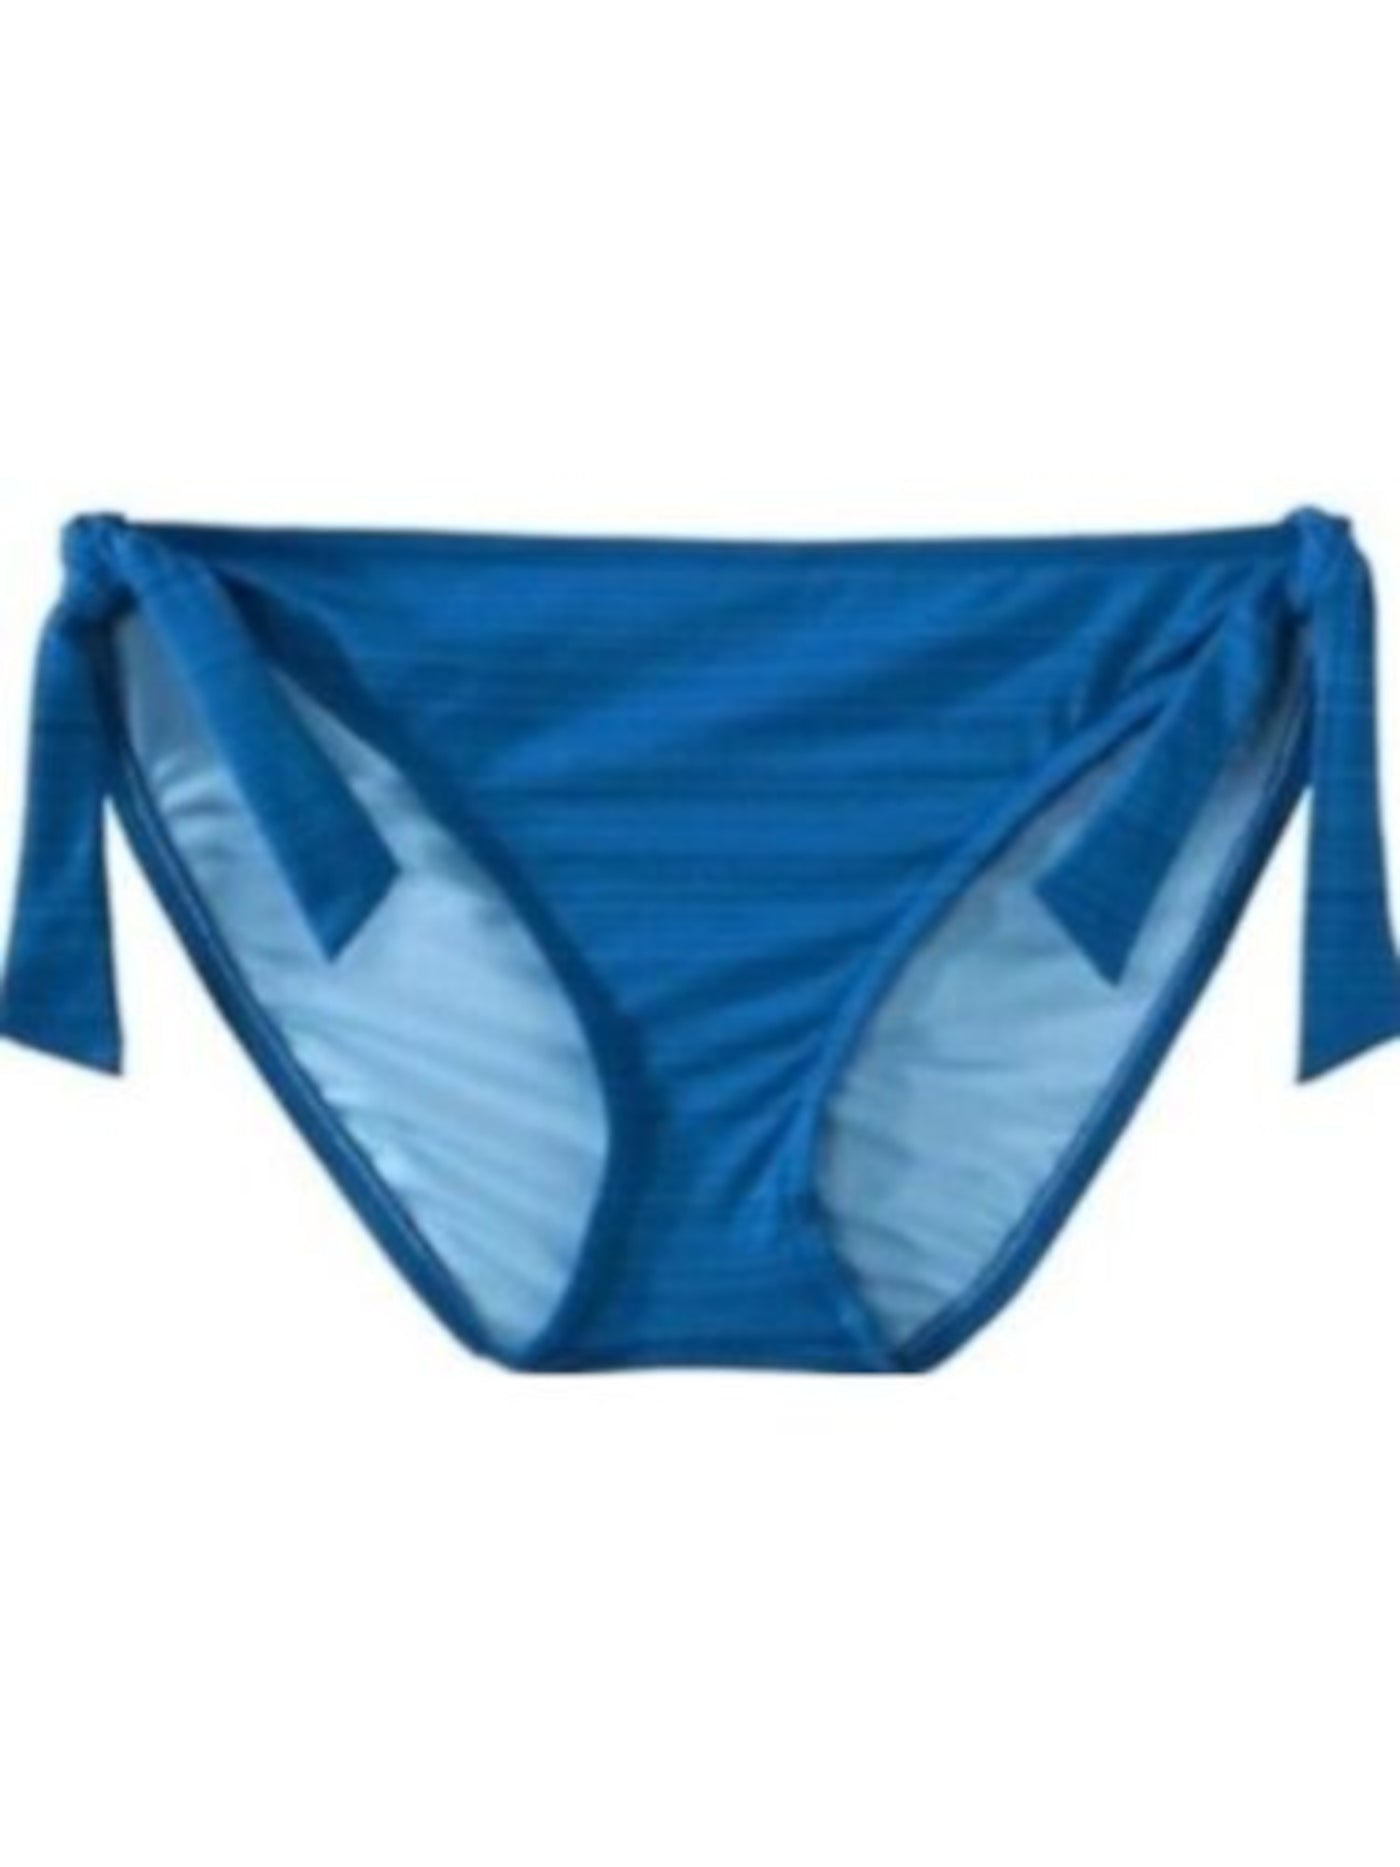 MOSSIMO SUPPLY CO. Women's Blue Striped Tie Bikini Swimwear Bottom L